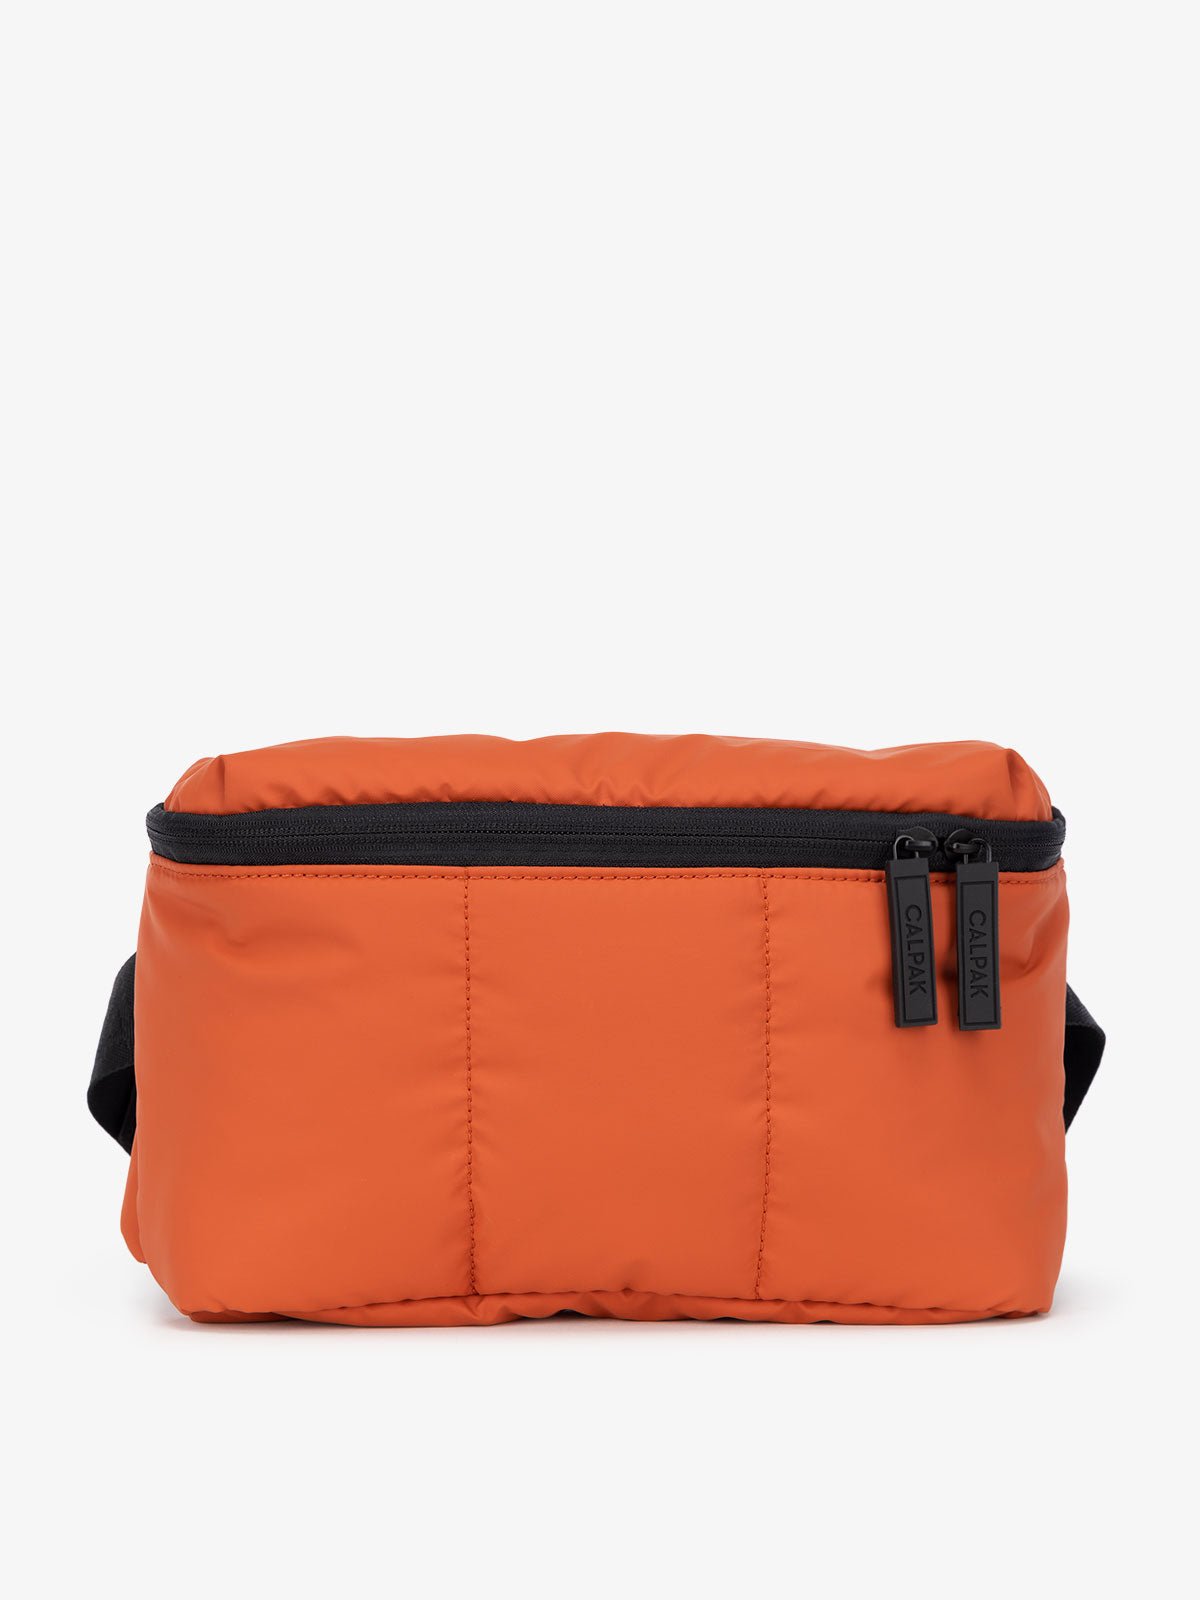 CALPAK red orange Luka belt bag in brick